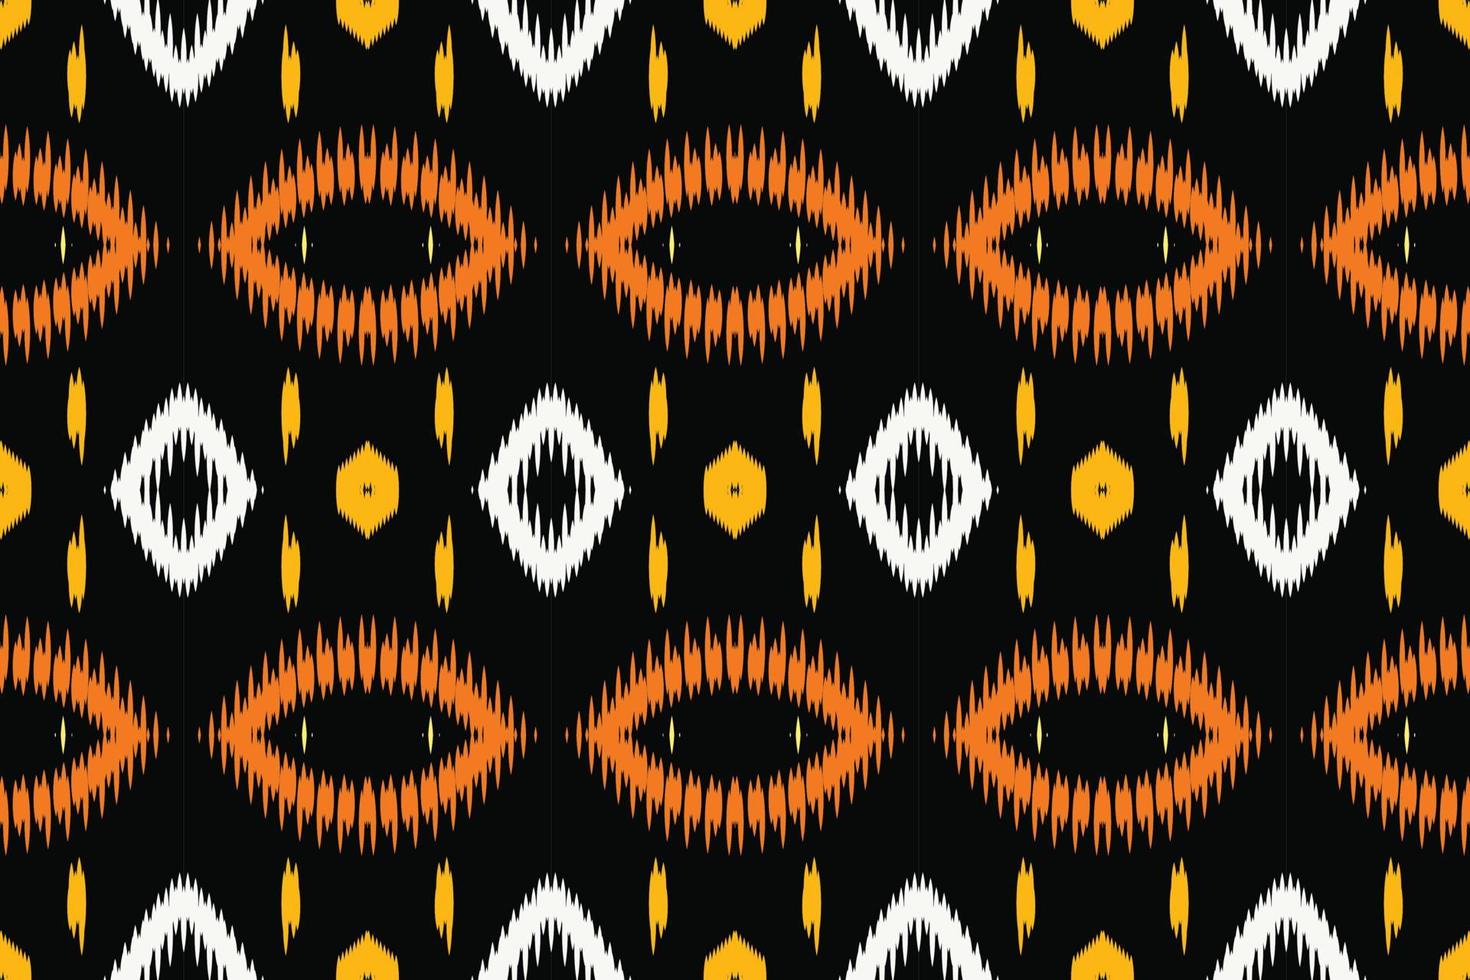 ikkat o ikat design tribale sfondo Borneo scandinavo batik boemo struttura digitale vettore design per Stampa saree Kurti tessuto spazzola simboli campioni